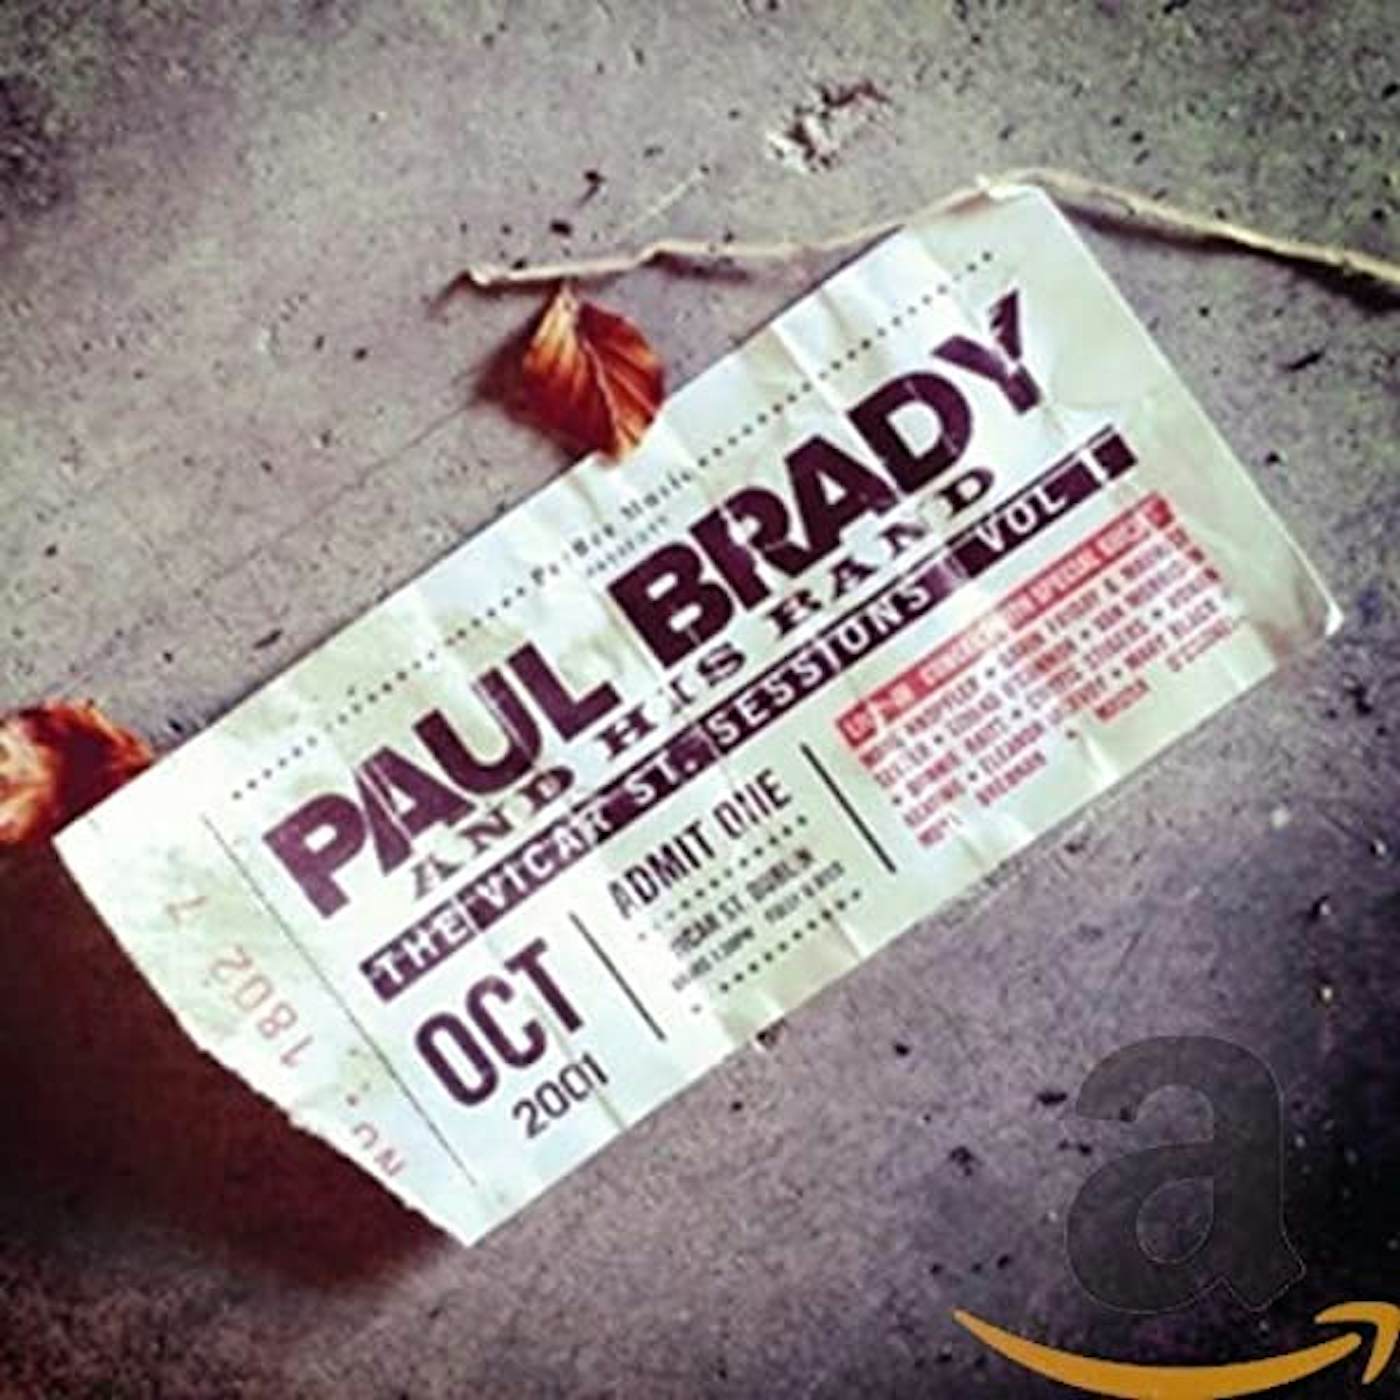 Paul Brady VICAR ST. SESSIONS 1 Vinyl Record - UK Release